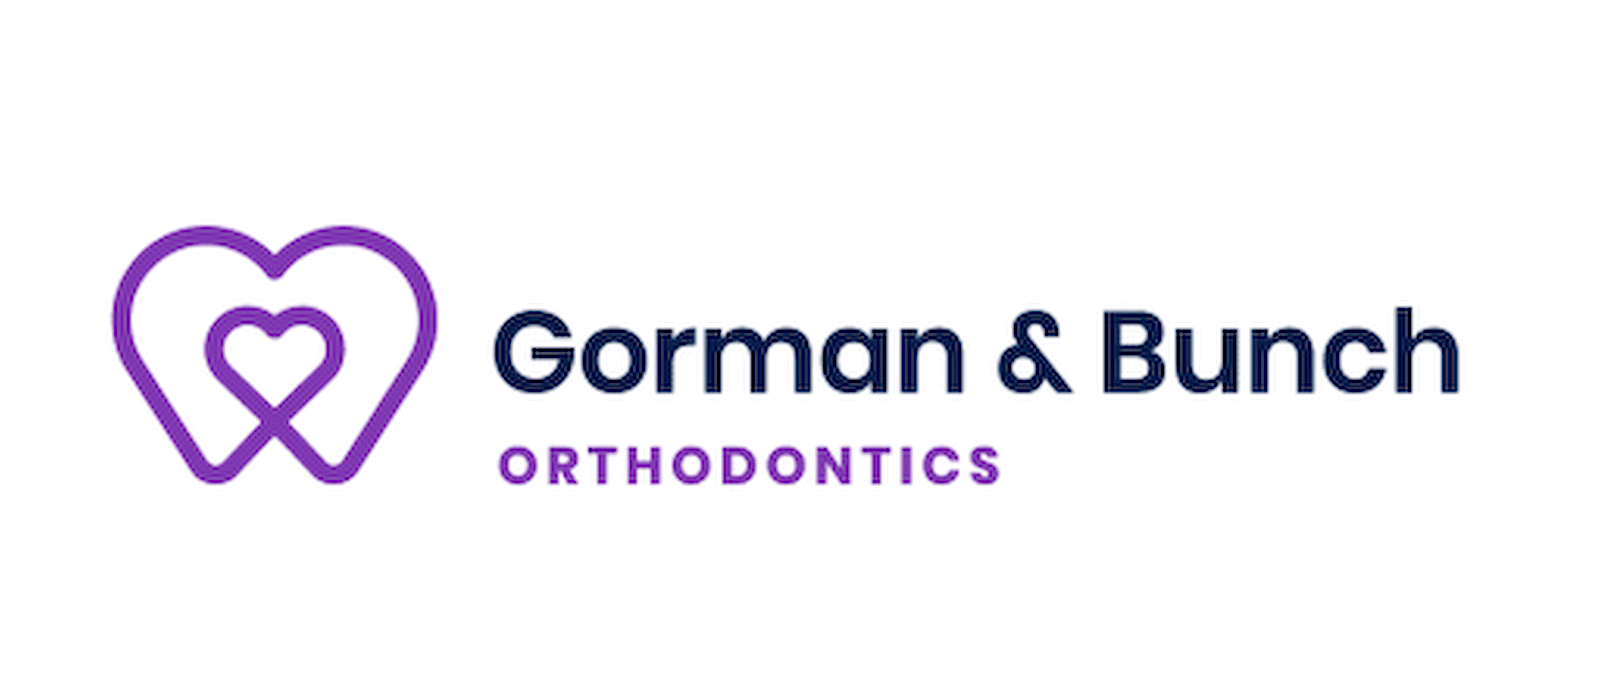 Gorman & Bunch Orthodontics